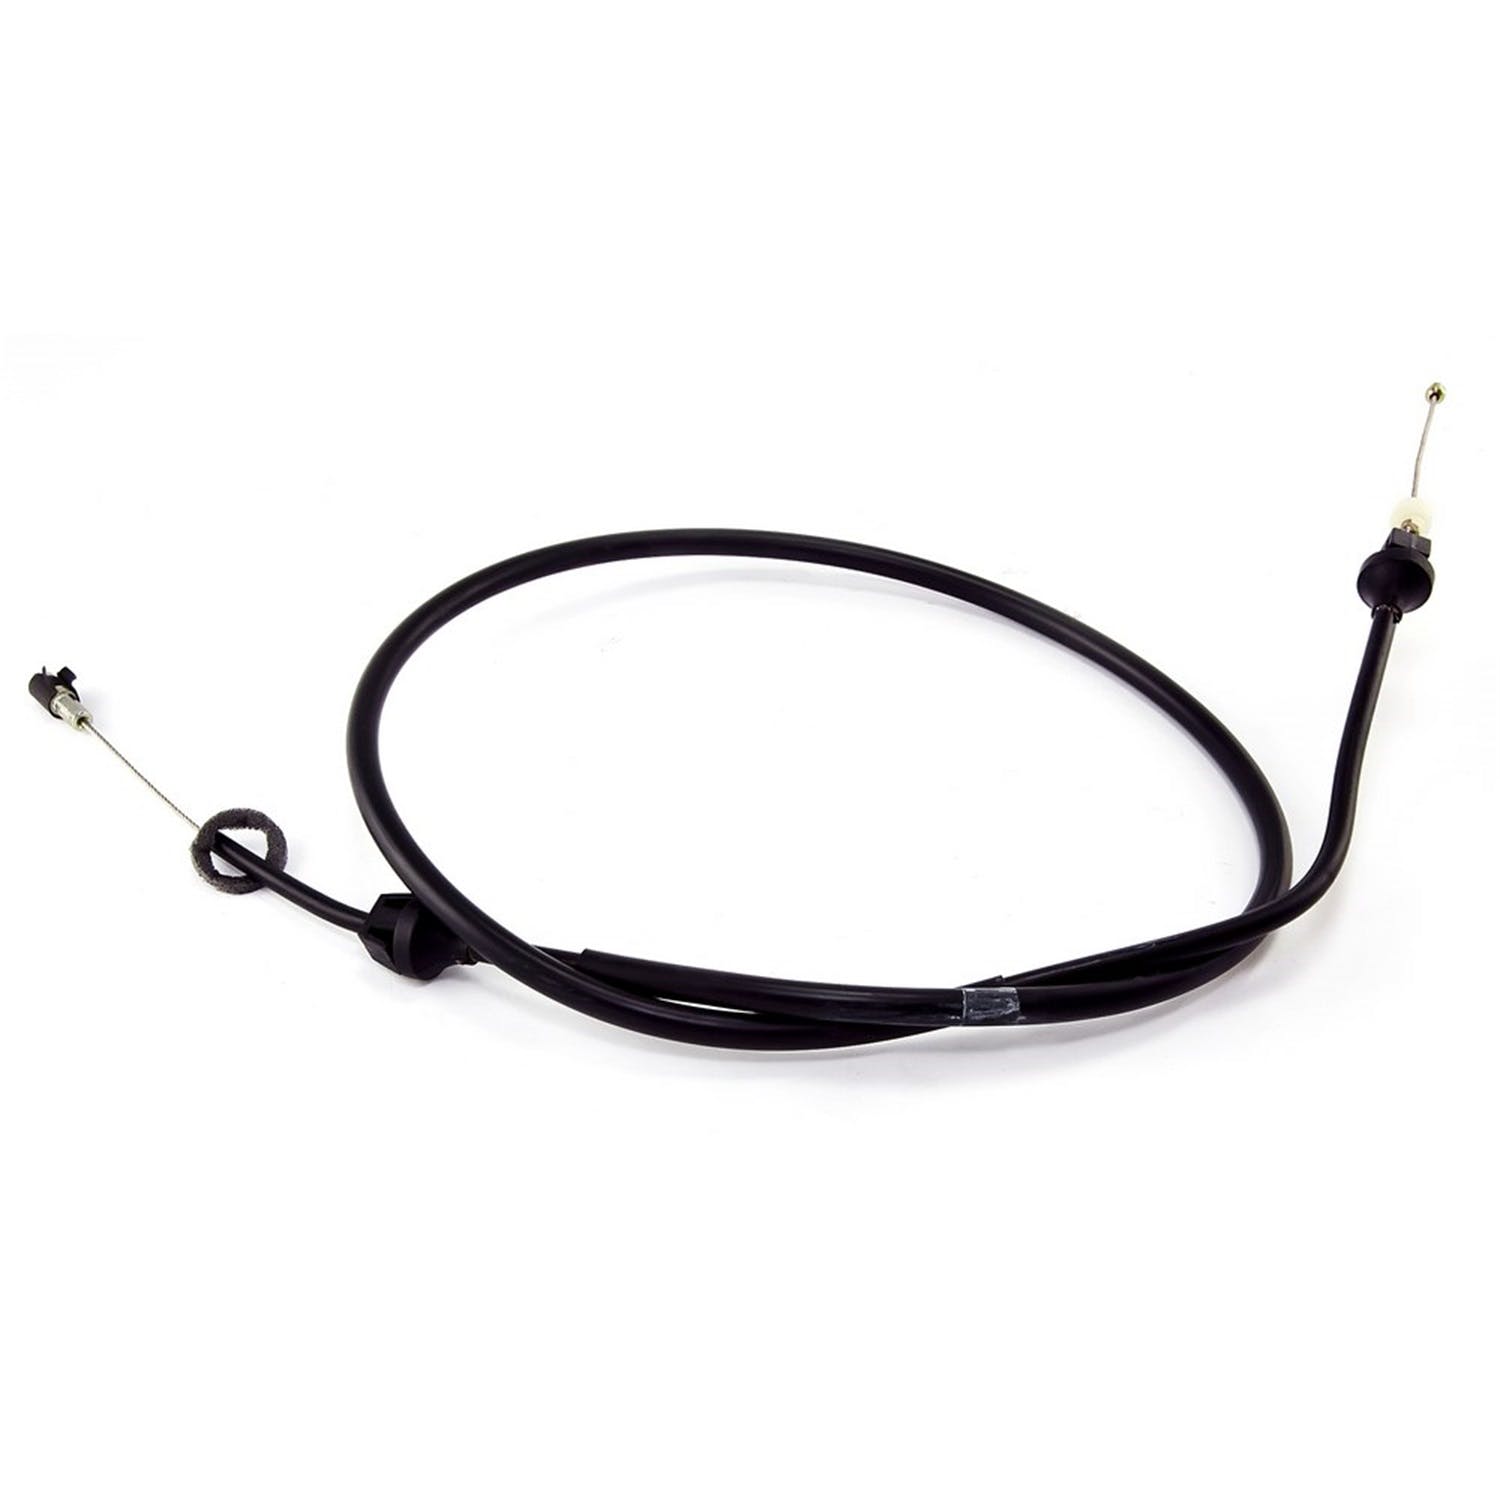 Omix-ADA 17716.15 Accelerator Cable